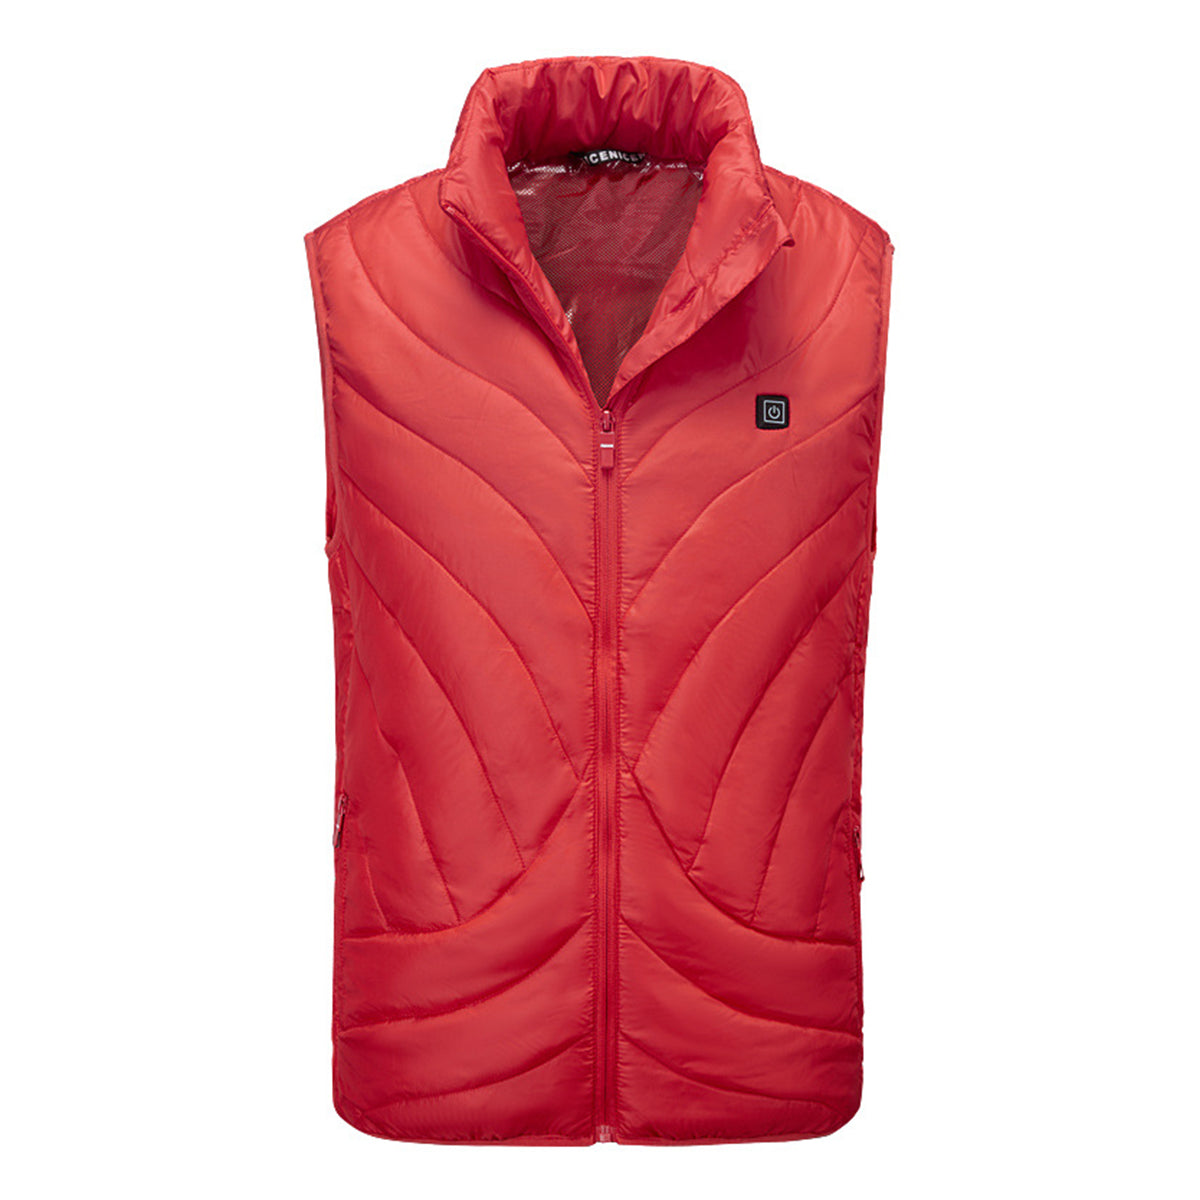 Maroon Red/Black 5V USB Heated Vest Men Winter Electrical Heated Sleeveless Jacket Outdoor Hiking